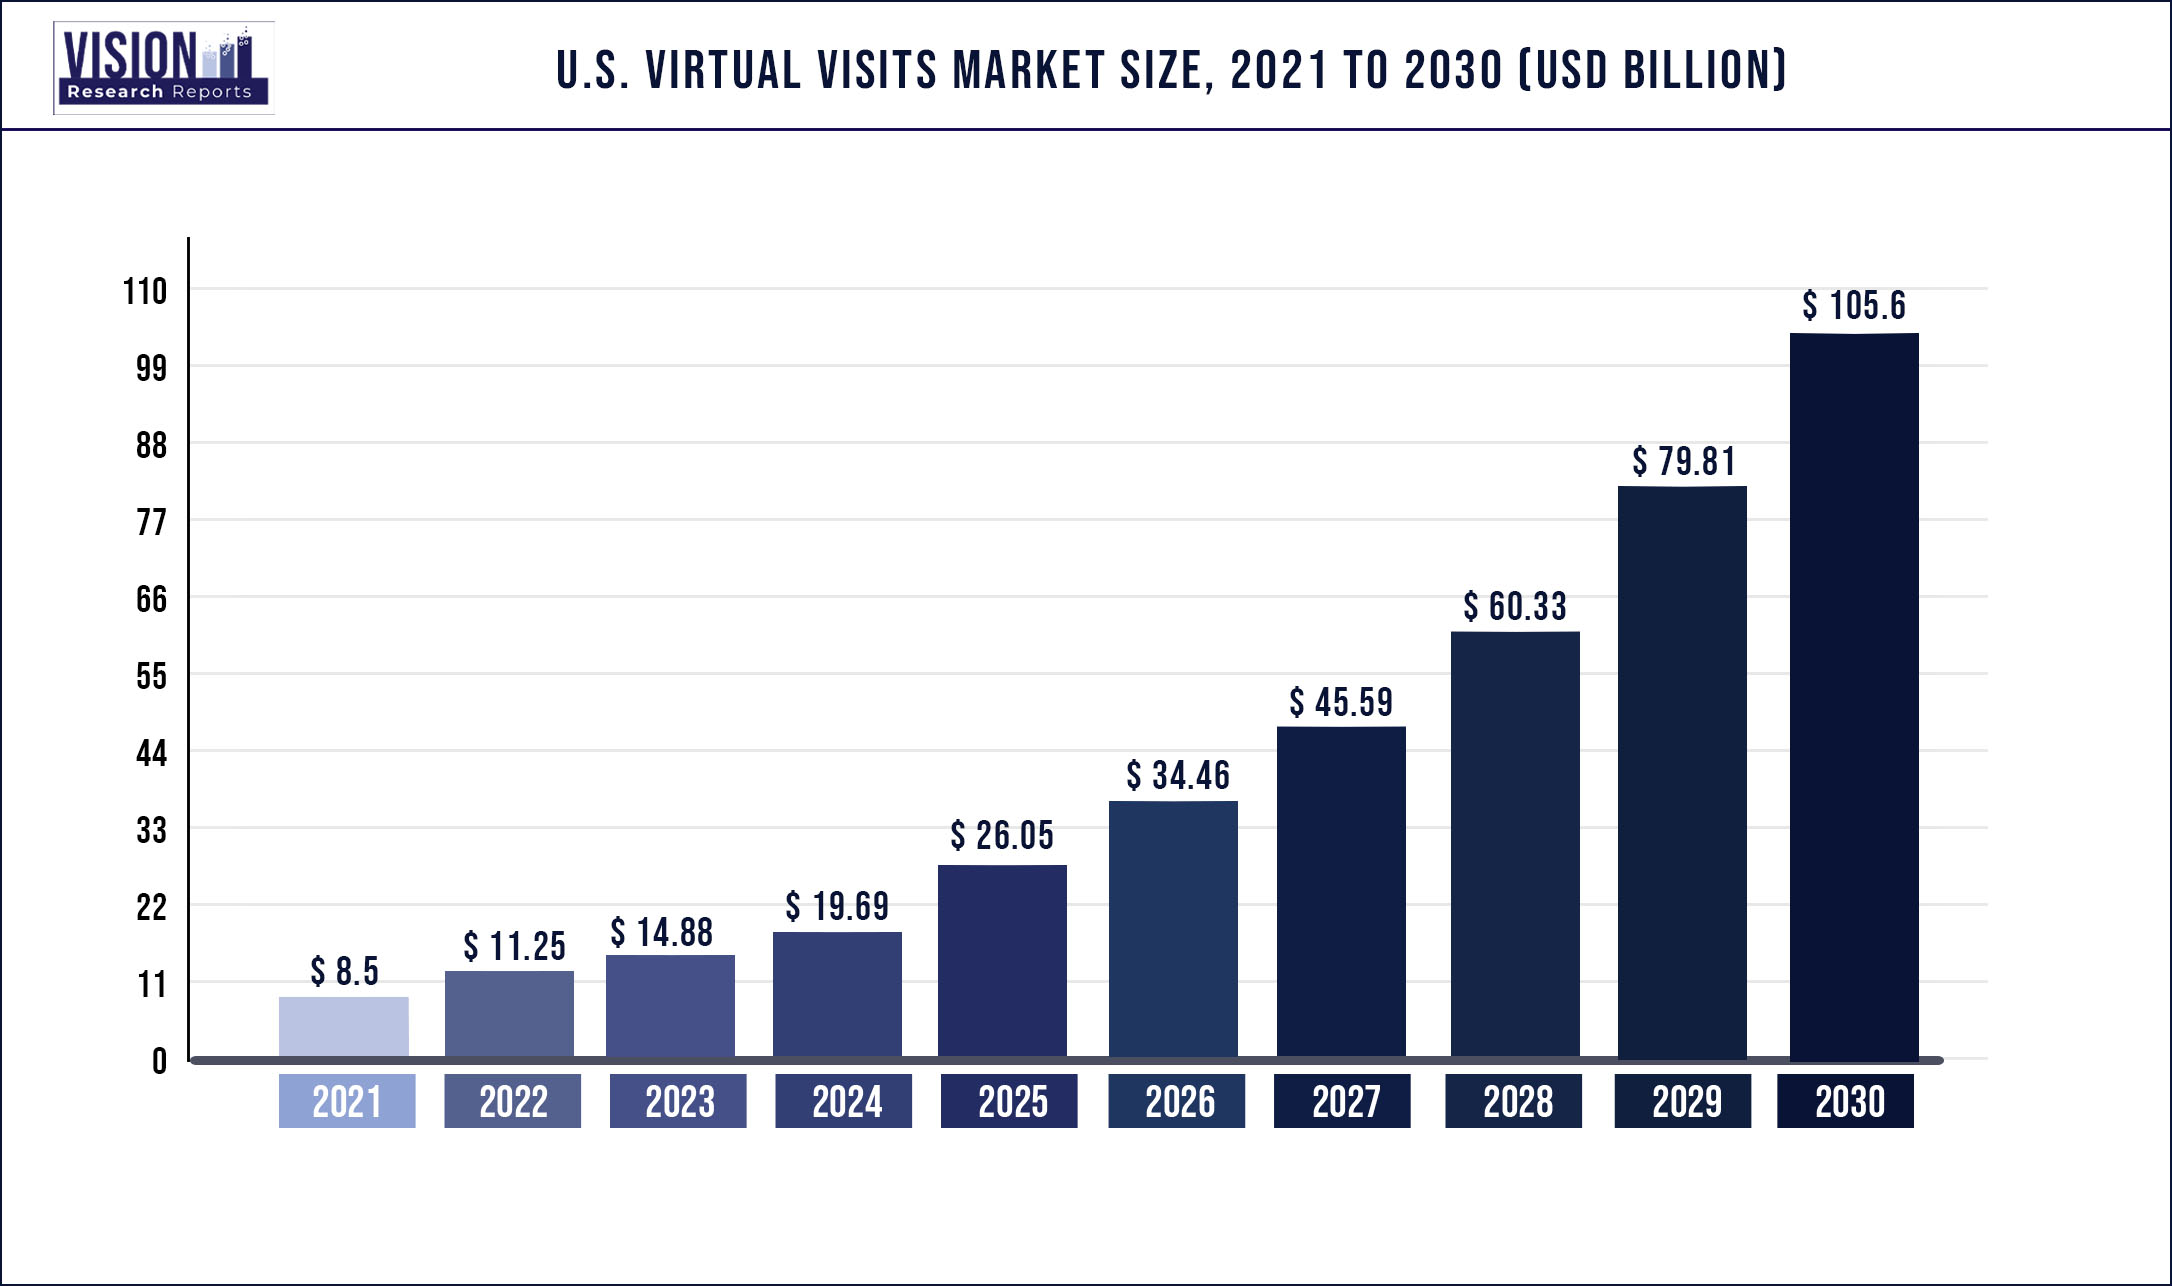 U.S. Virtual Visits Market Size 2021 to 2030